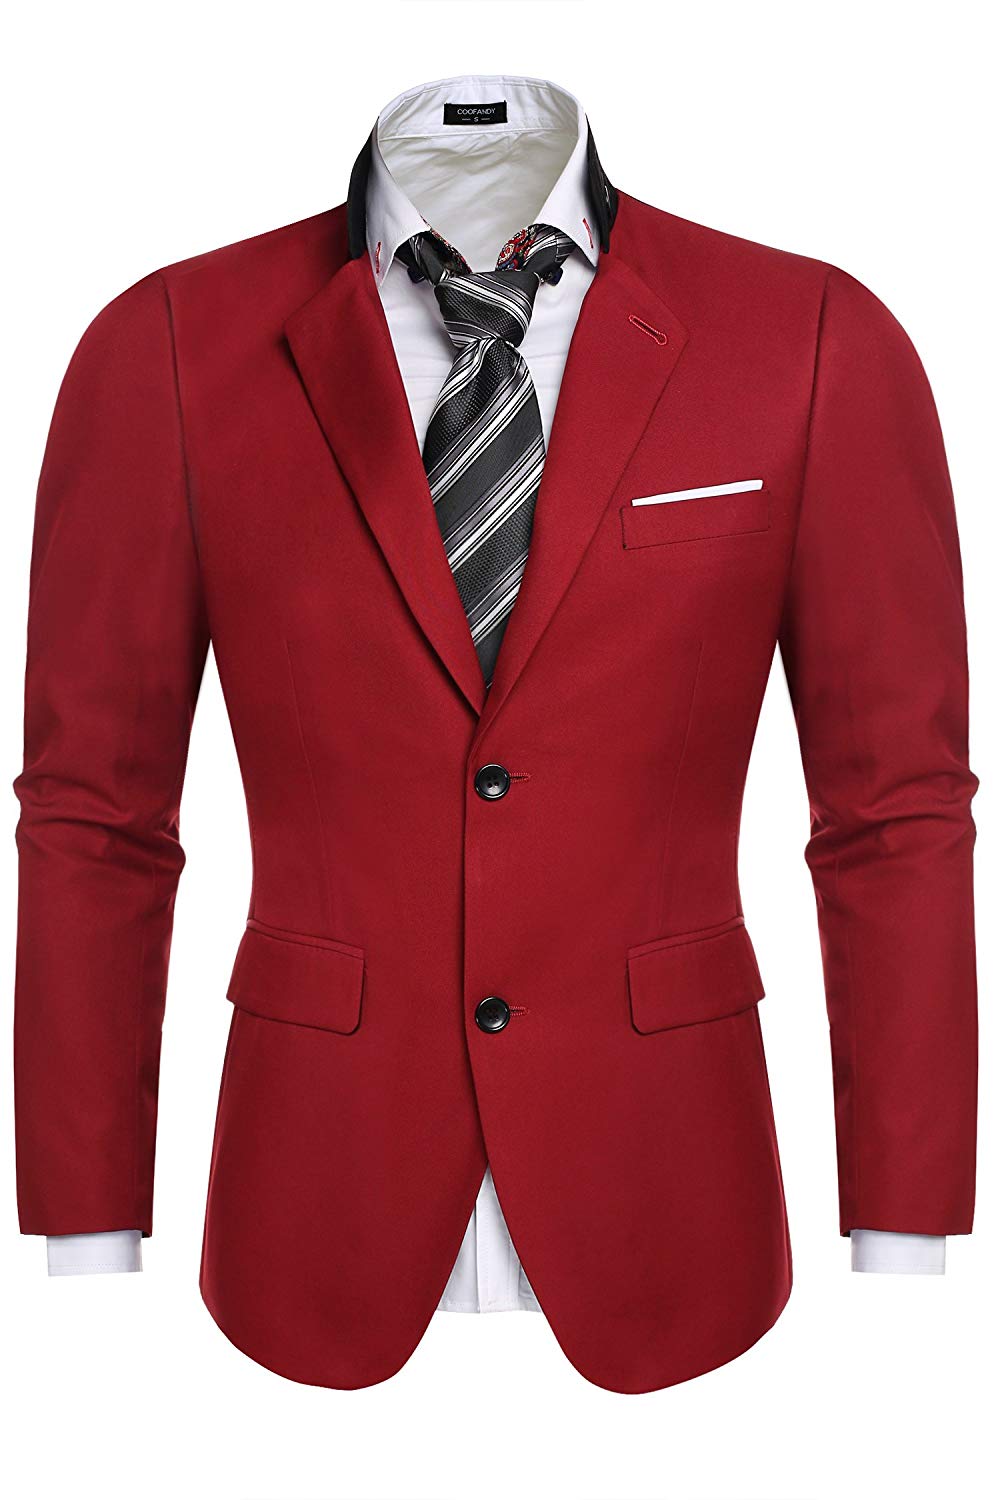 COOFANDY Men's Casual Dress Suit Slim Fit Stylish Blazer Coats Jackets